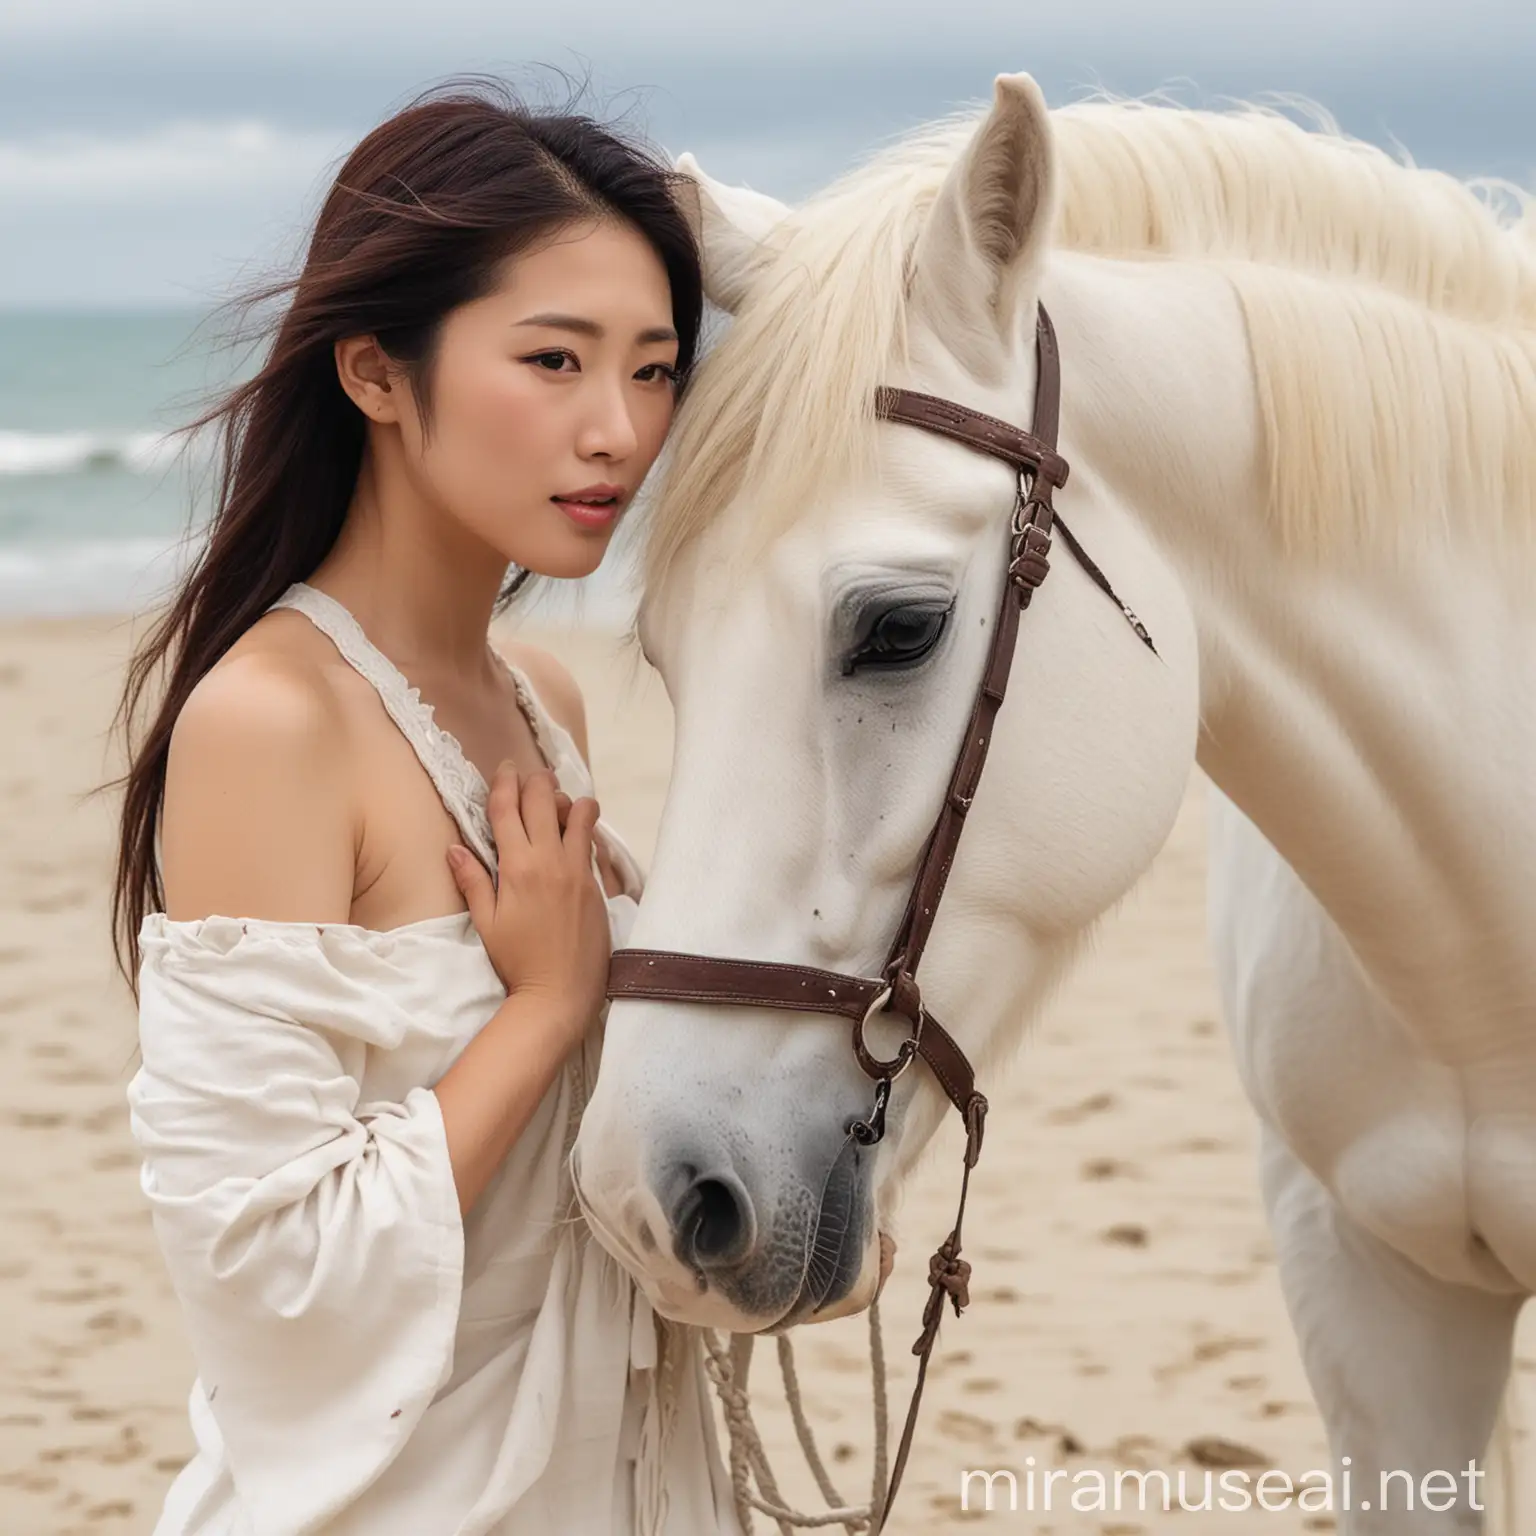 Japanese Woman Bonding with White Horse on Beach